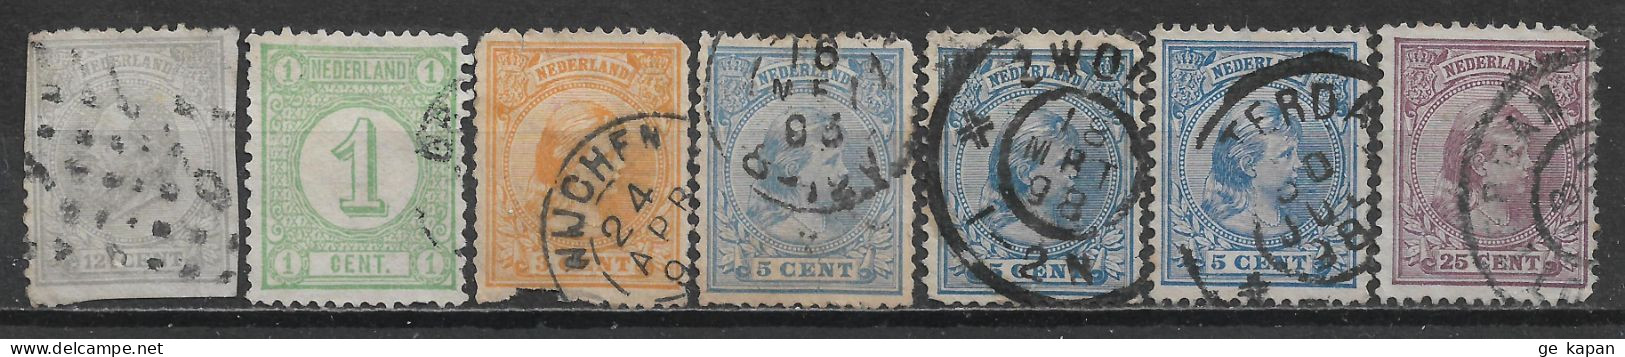 1875-1894 NETHERLANDS Set Of 7 Used Stamps (Michel # 22D,31aD,34a,35ab,35b,42b) CV €11.10 - Usados